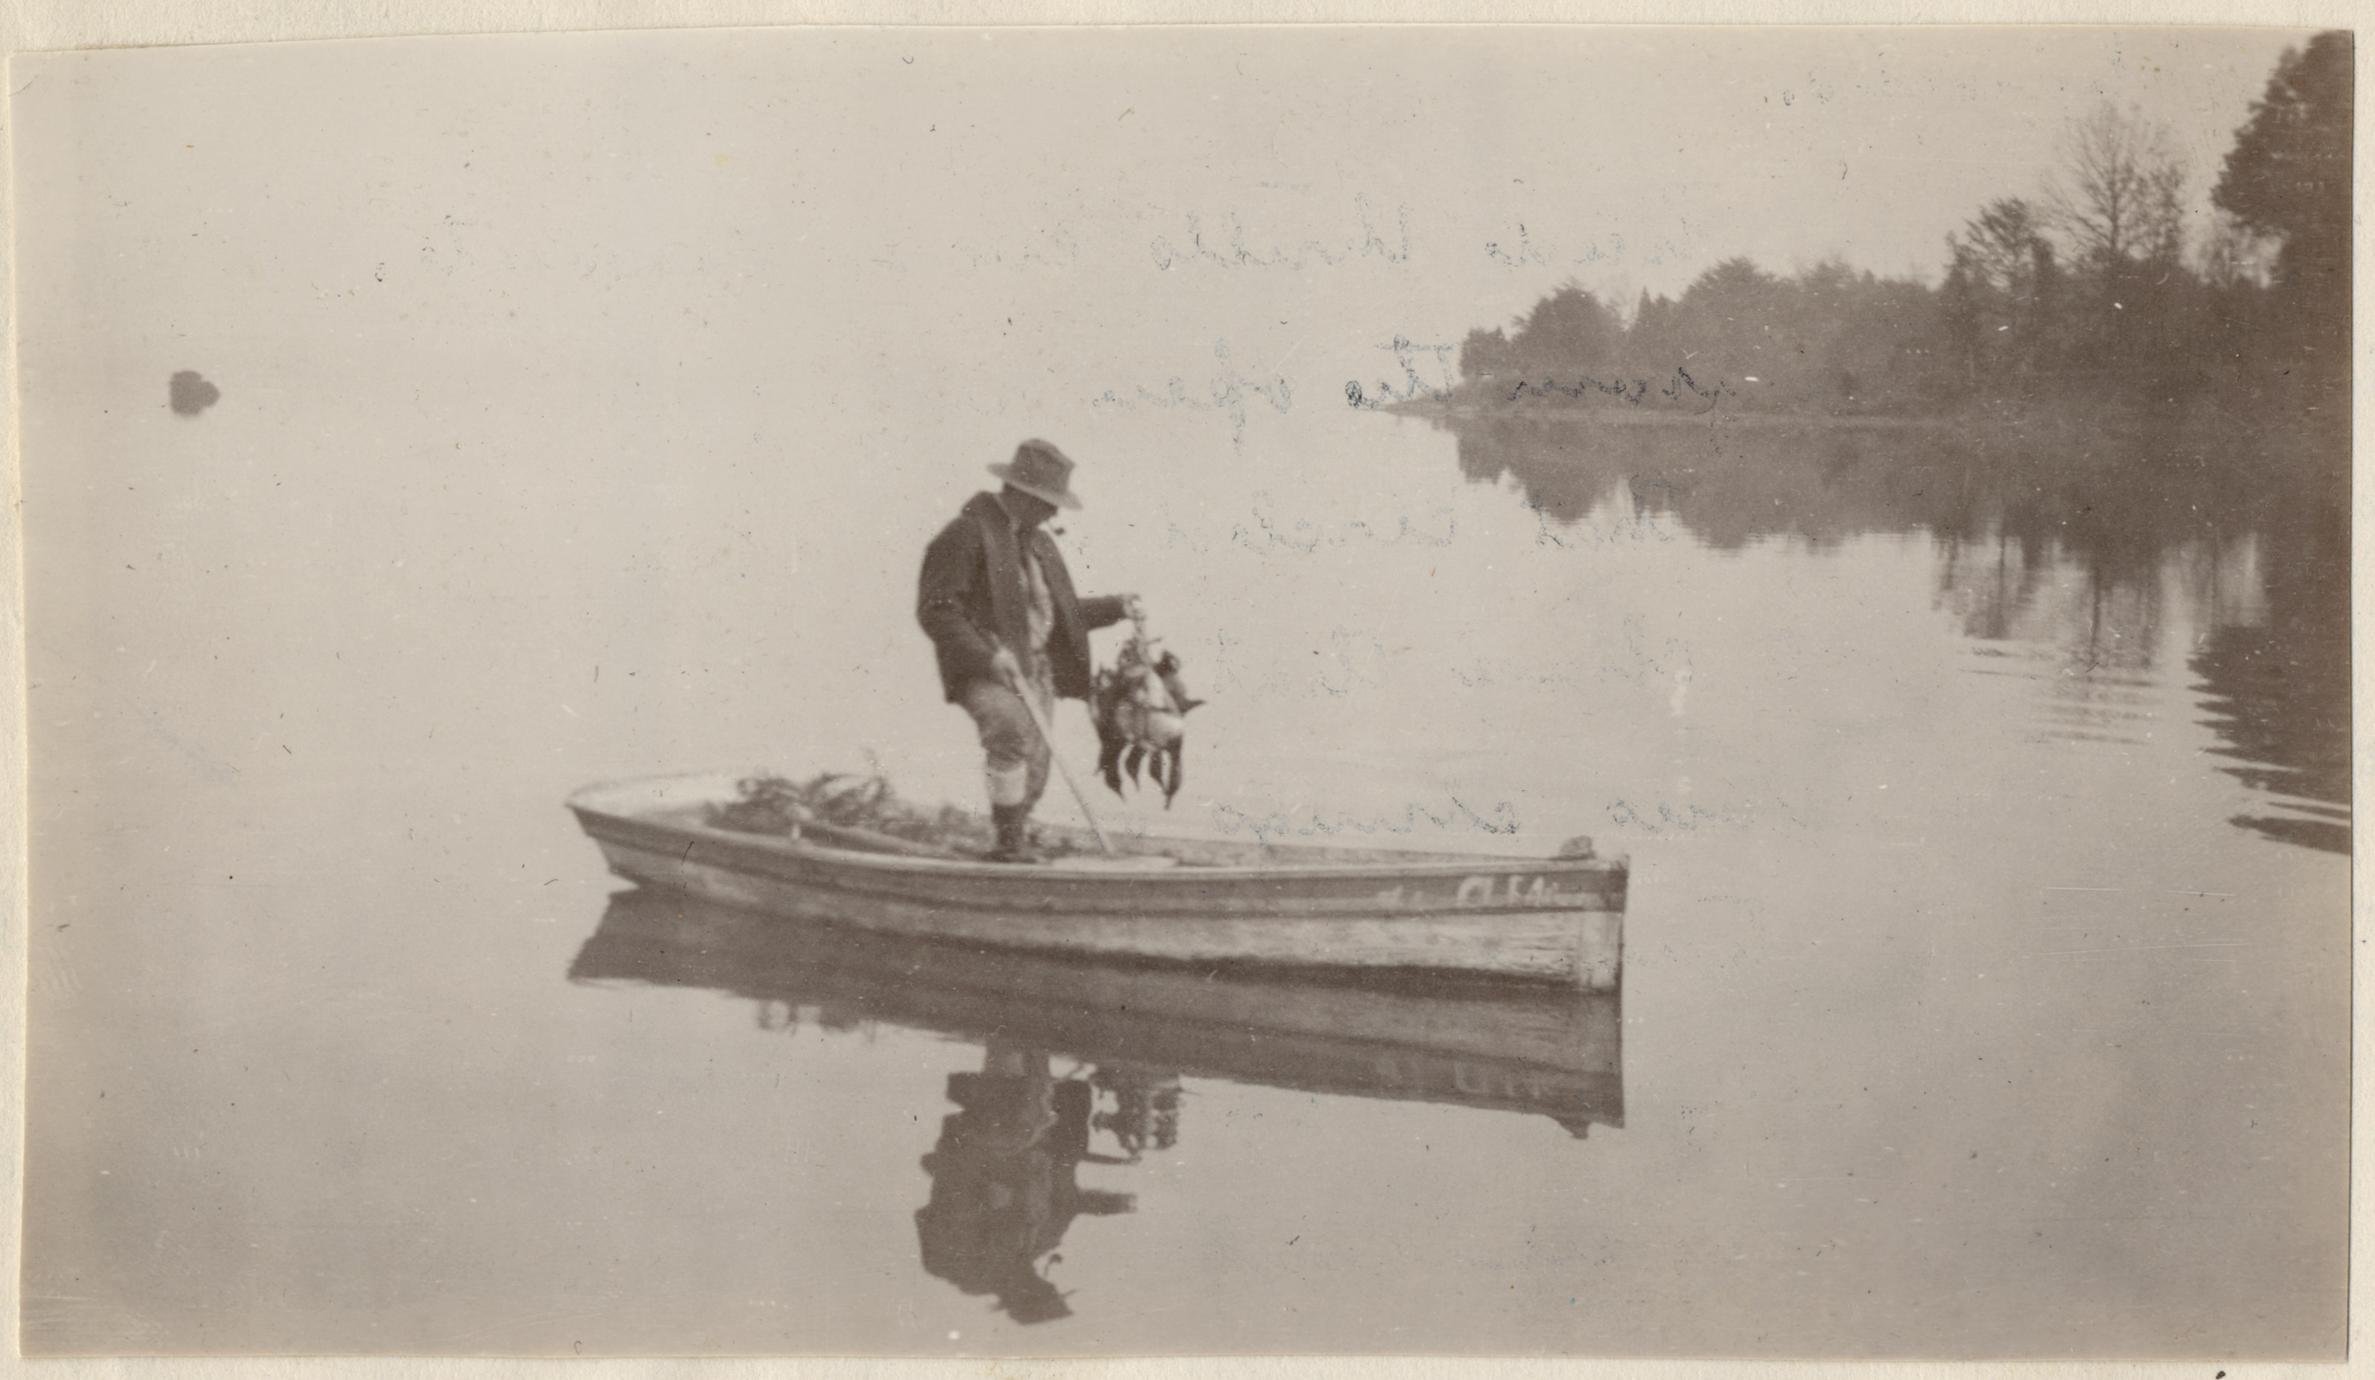 Aldo duck hunting from boat, Wicomico River, Maryland, November 1924